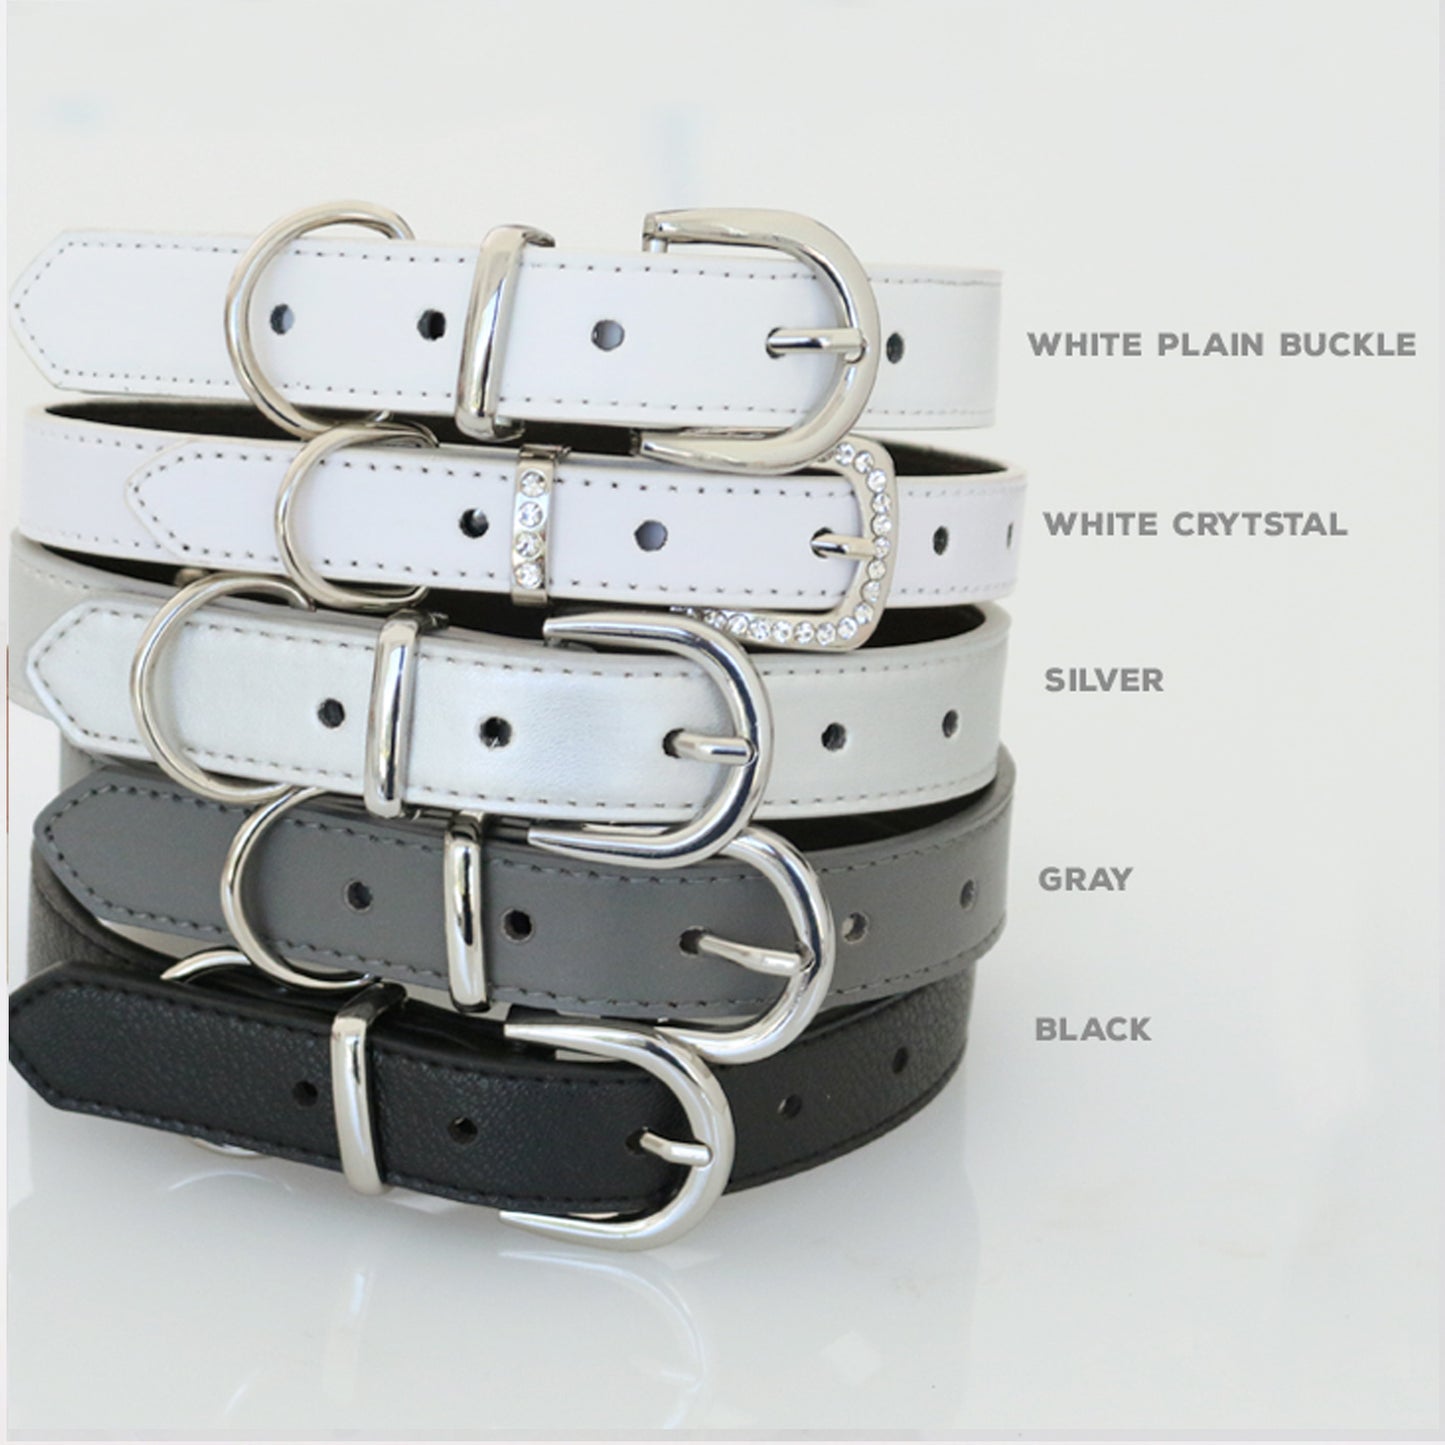 Ivory and white Flower dog Ring Bearer collar wedding, Burlap, Feather, Lace , Wedding dog collar